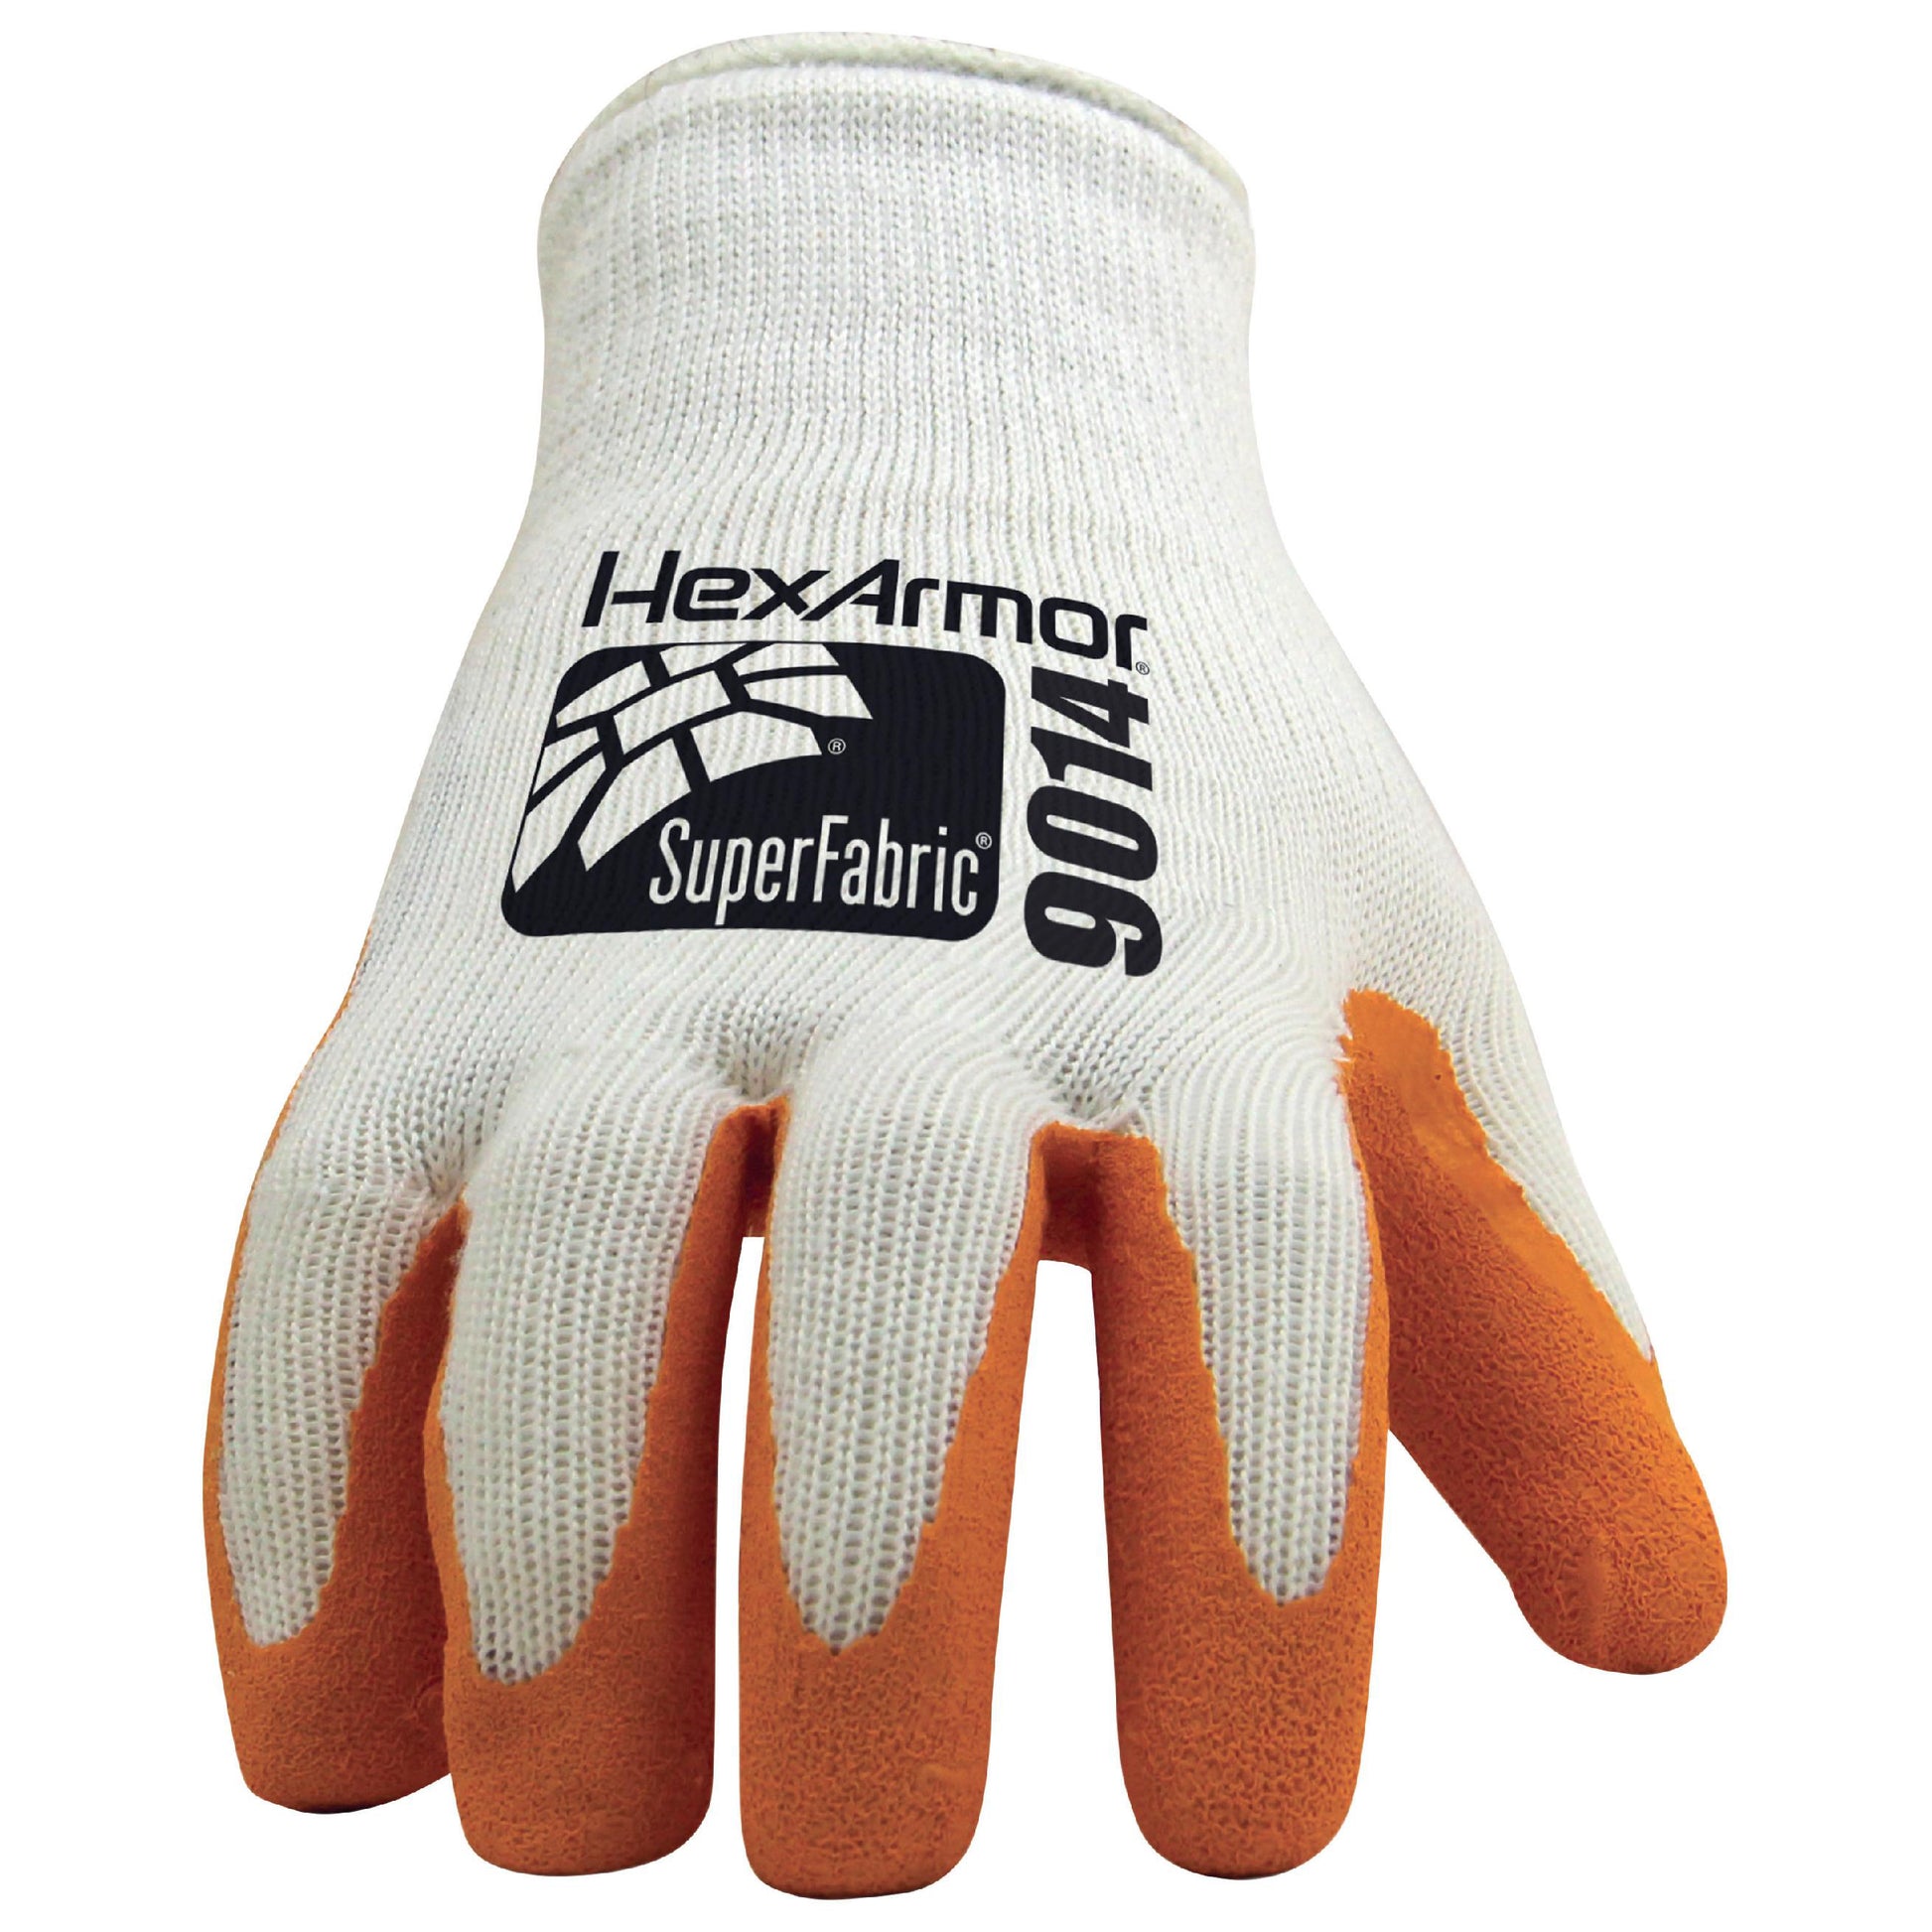 Hexarmor 9014 Sharpsmaster Needle-stick gloves, sharps resistant. Waste management, facilities, washrooms, maintenance. protexu